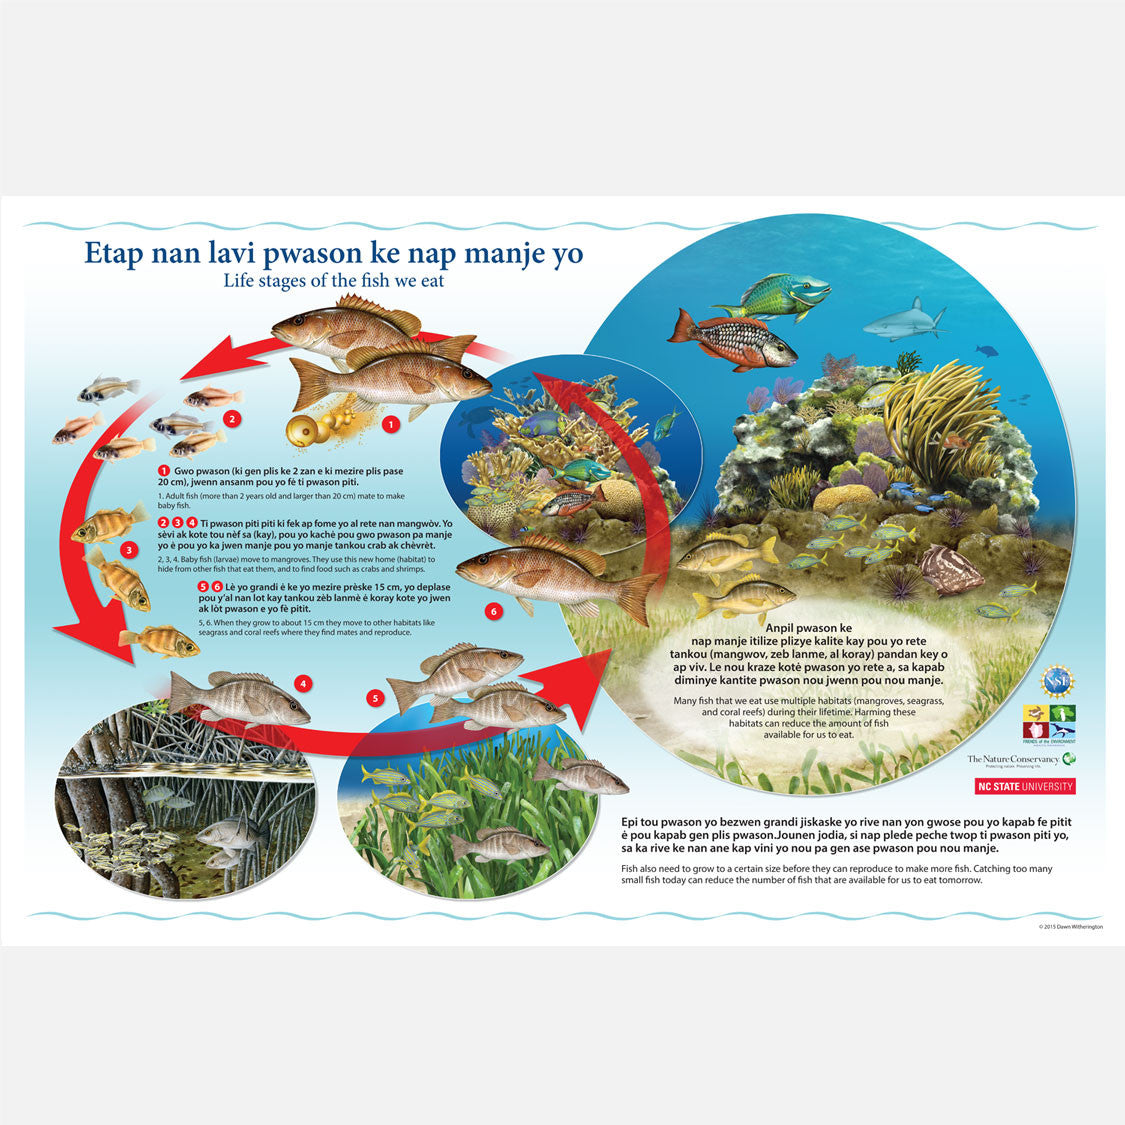 This beautiful poster provides information explaining the importance of fish habitats for Haitian fishermen. 